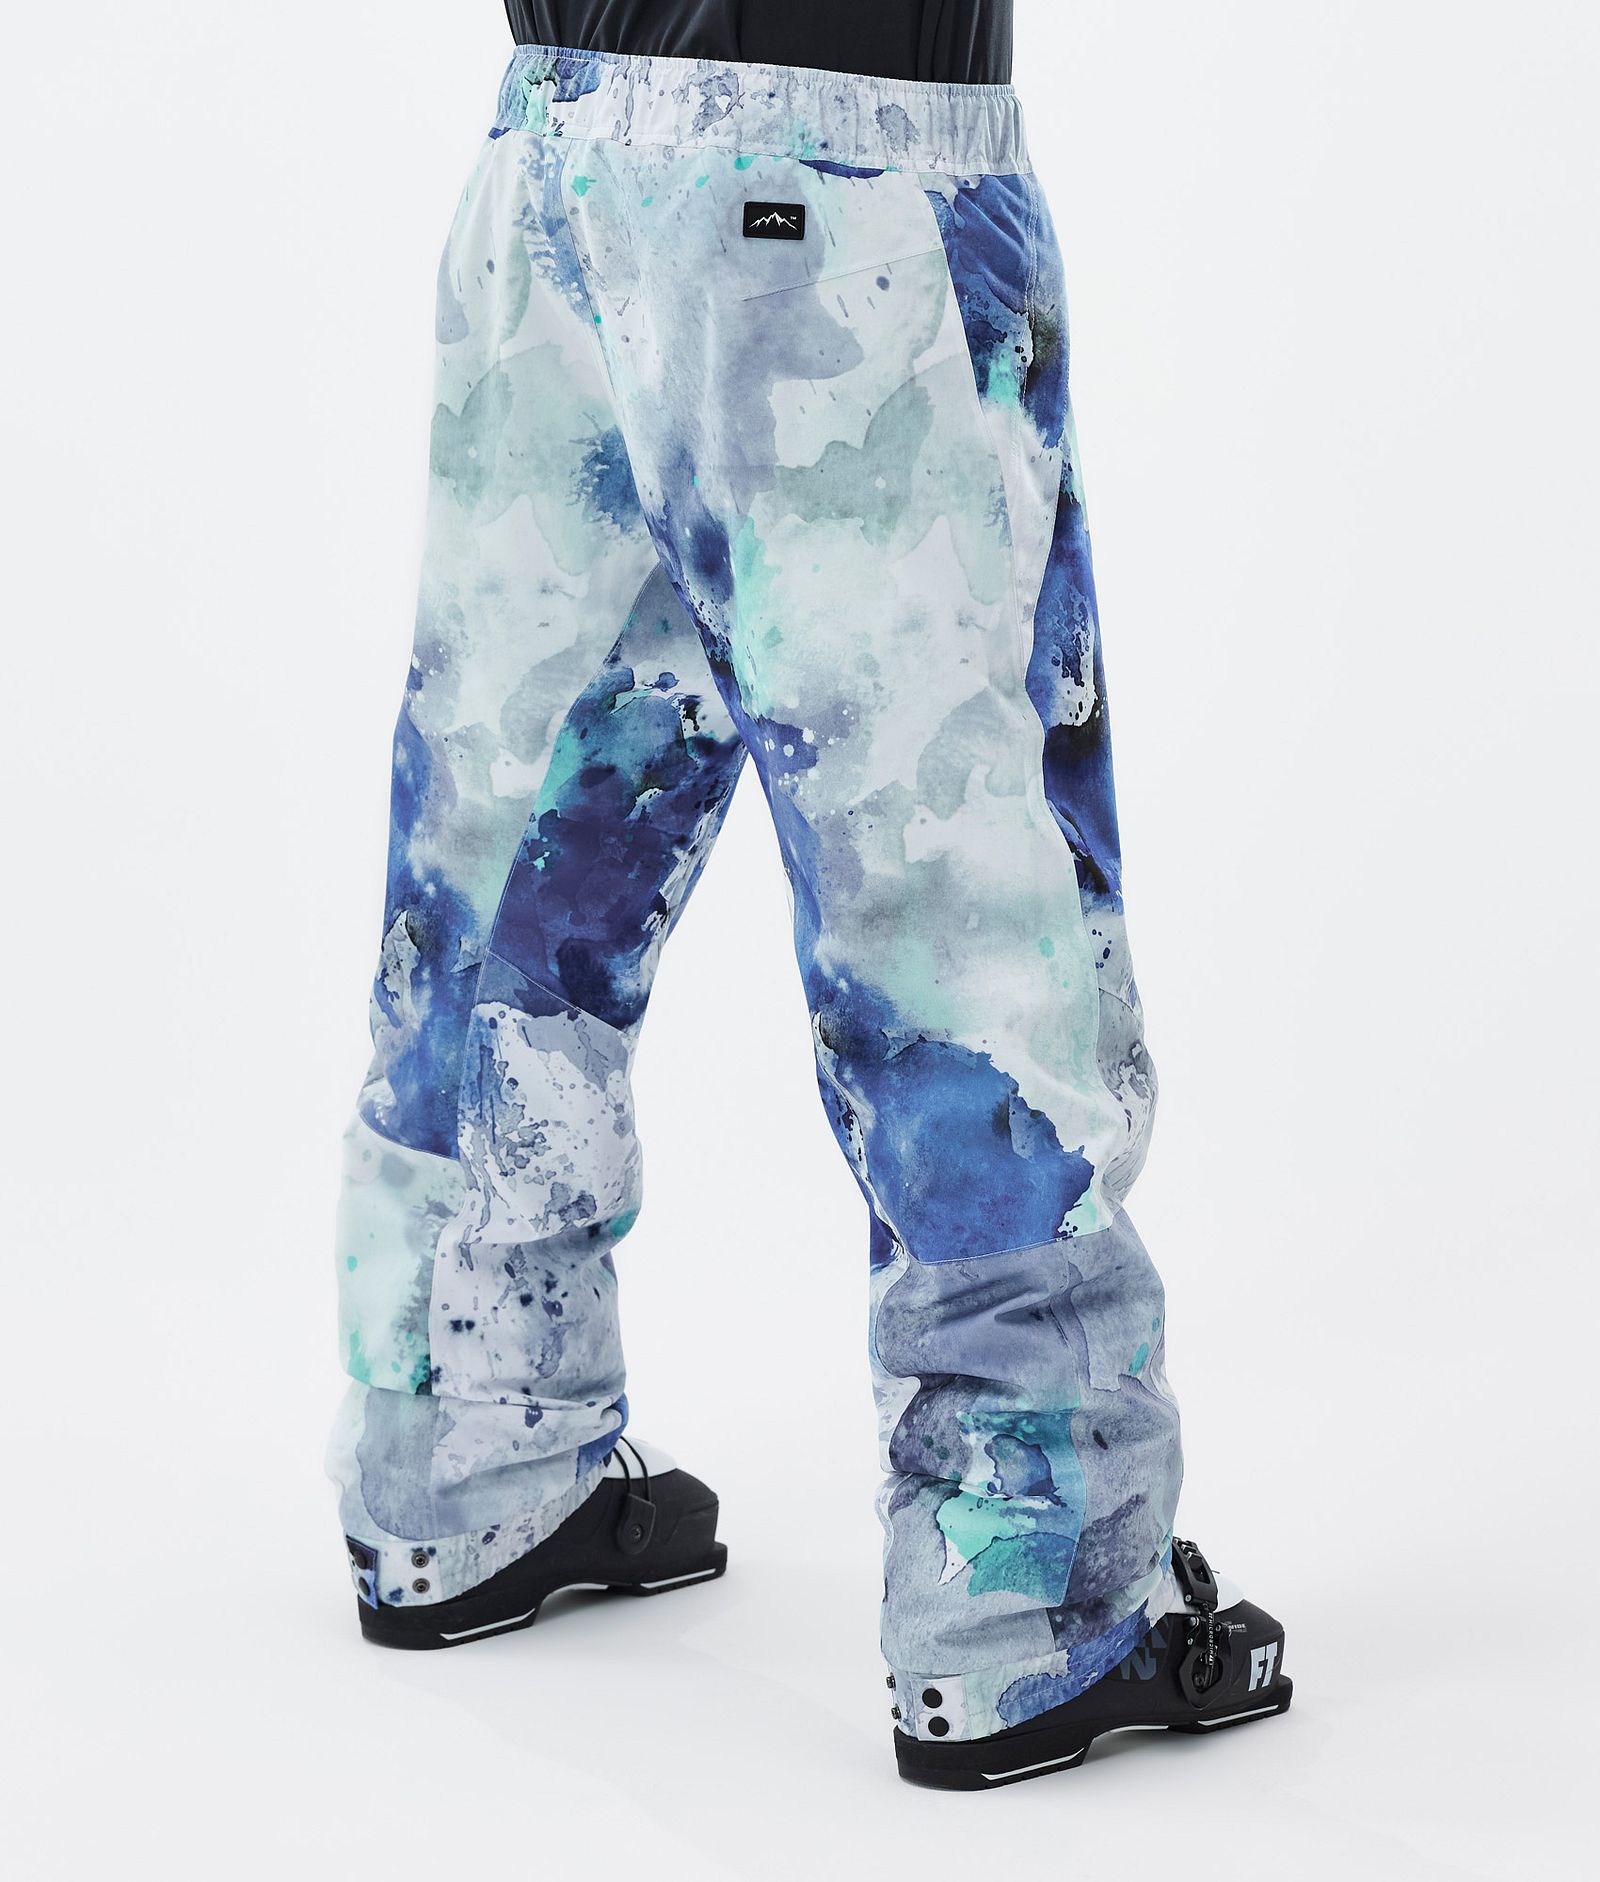 Blizzard Pantalon de Ski Homme Spray Blue Green, Image 4 sur 5